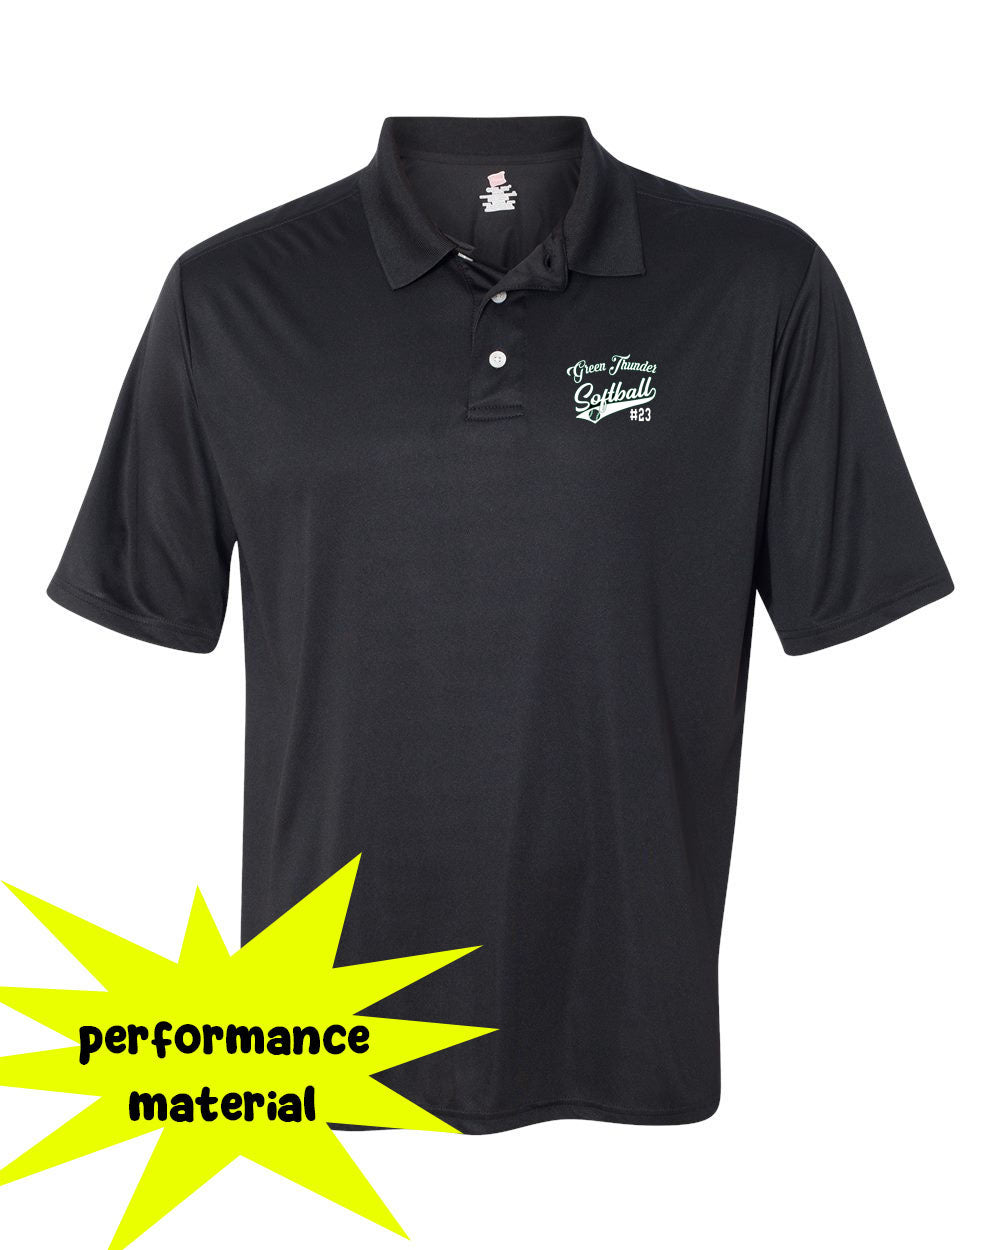 Green Thunder Performance Material Polo T-Shirt Design 2